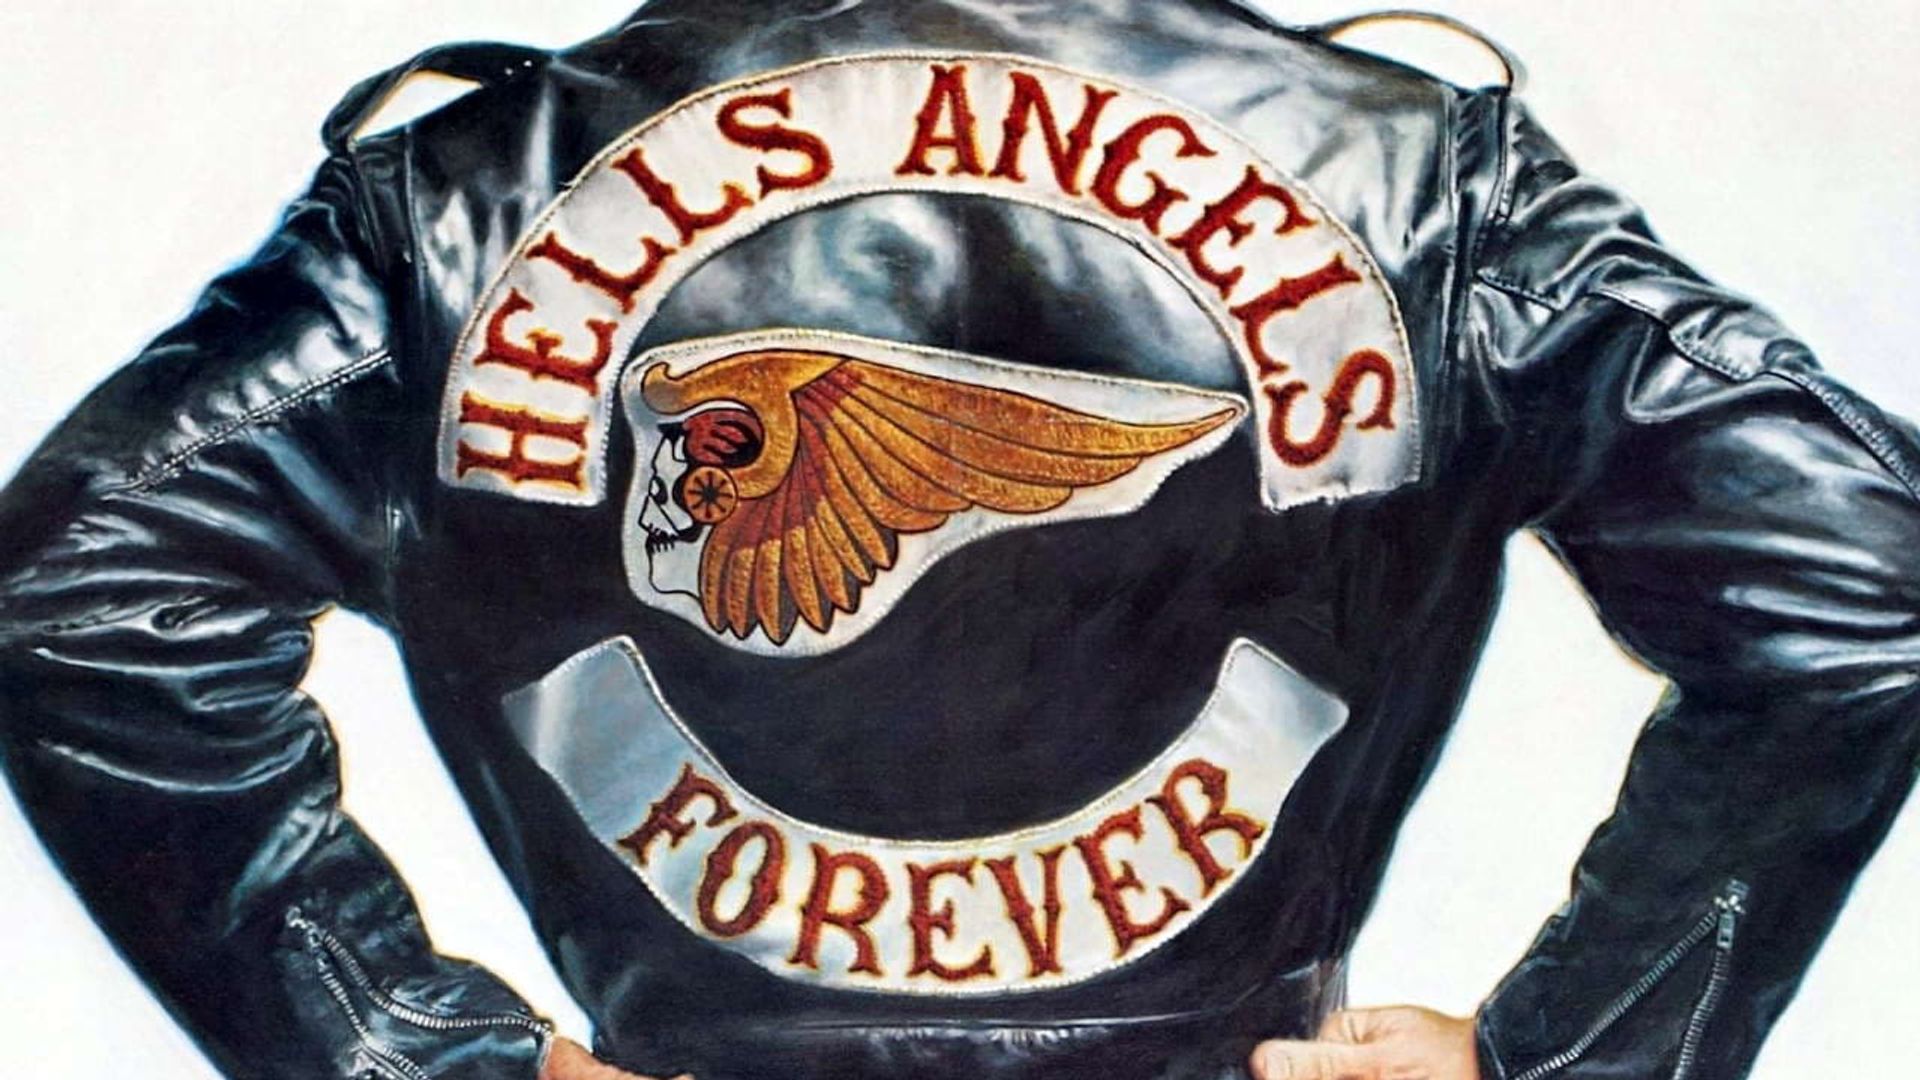 Hells Angels Forever background